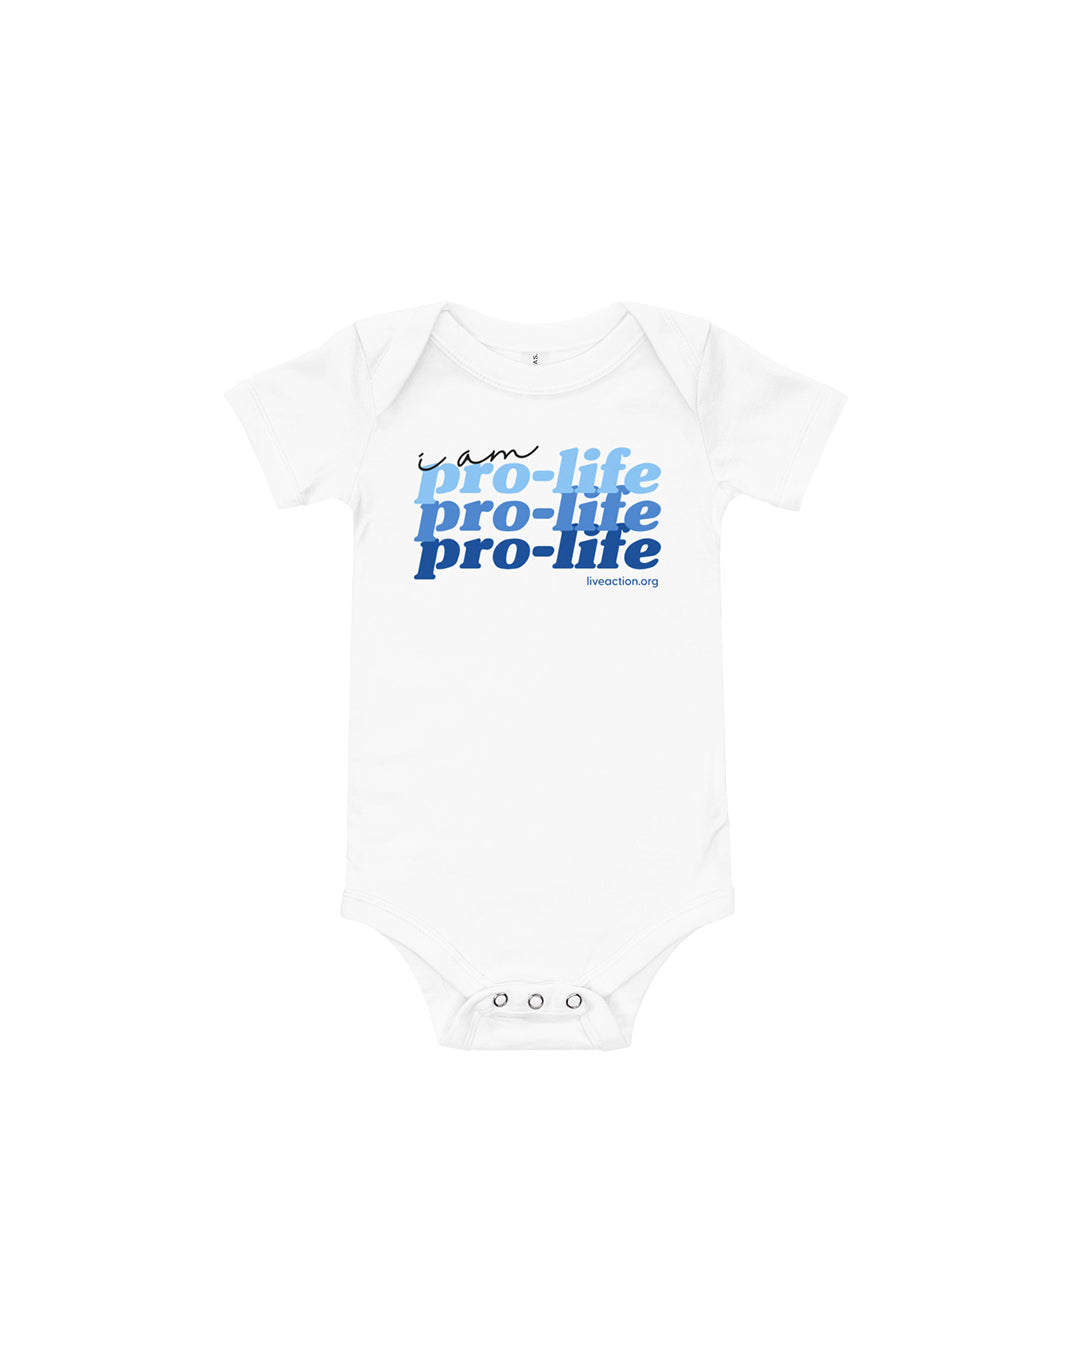 Pro-Life Baby Onesie in Blue